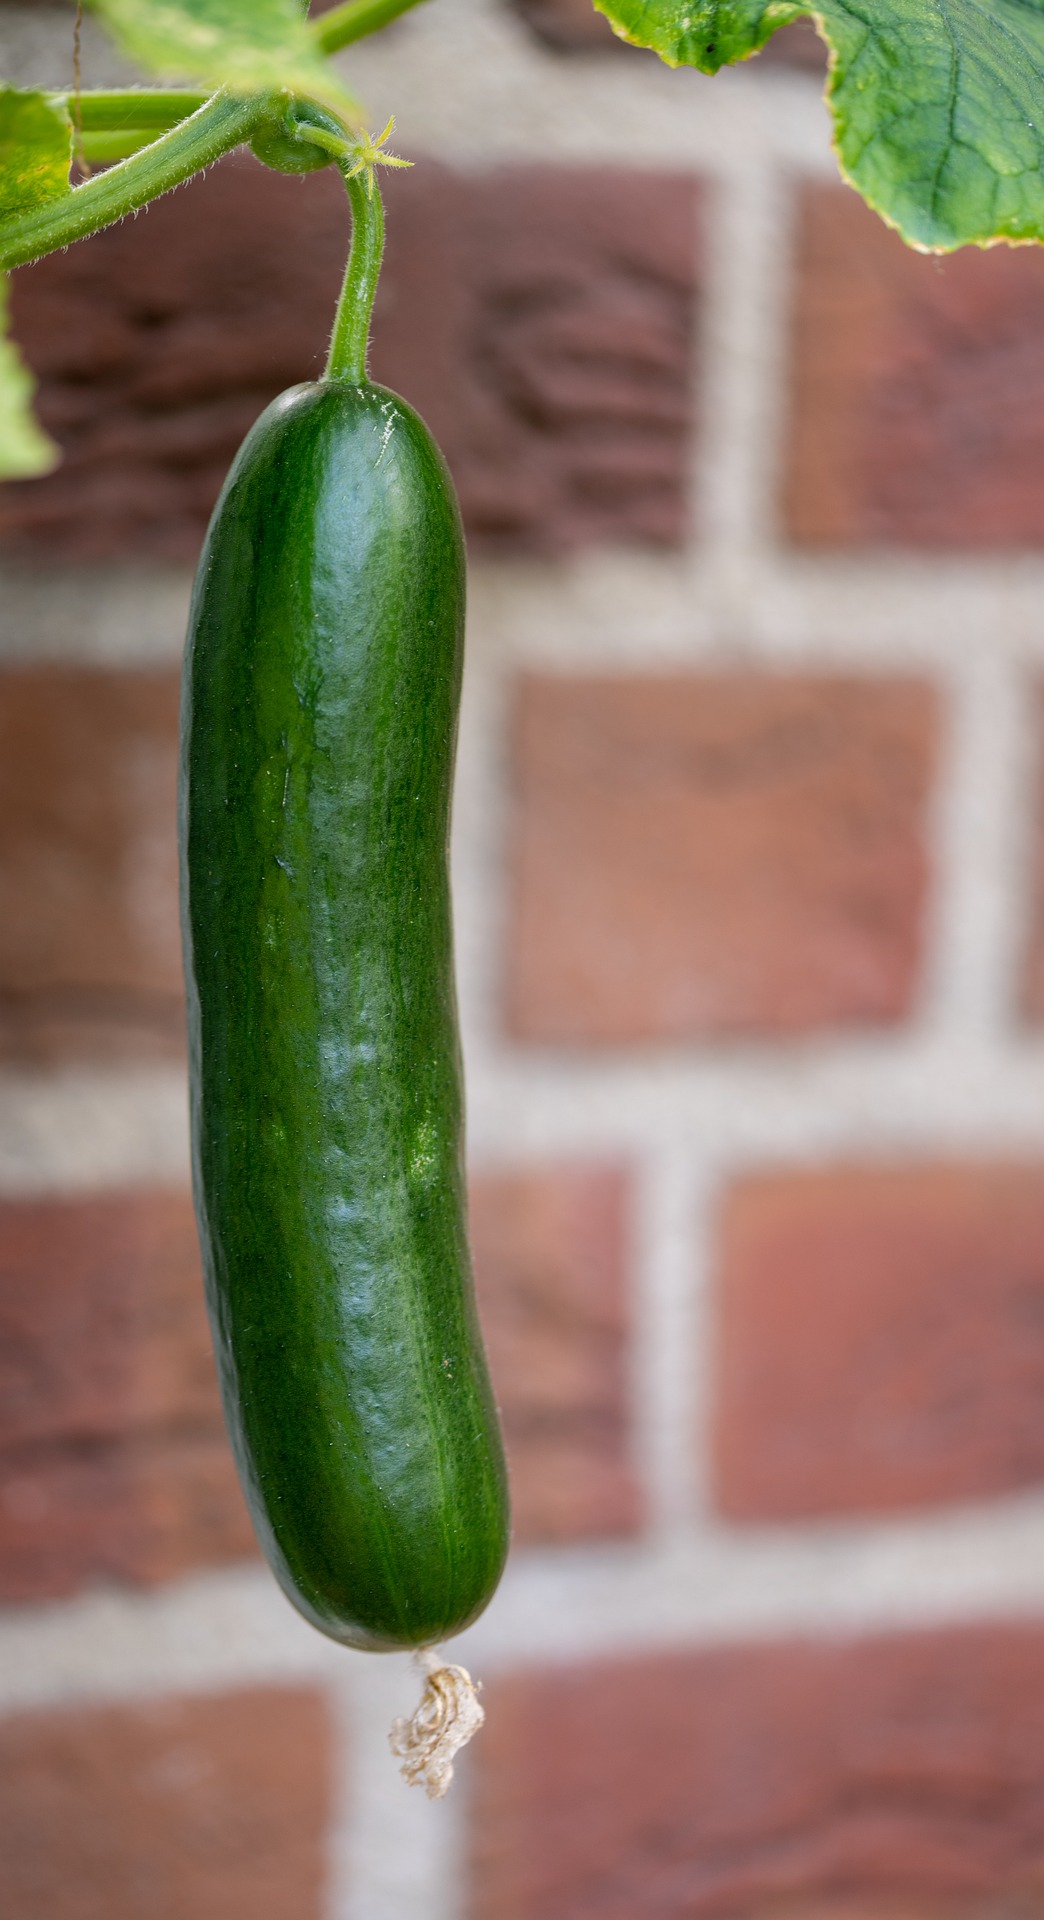 How To Grow English Cucumbers